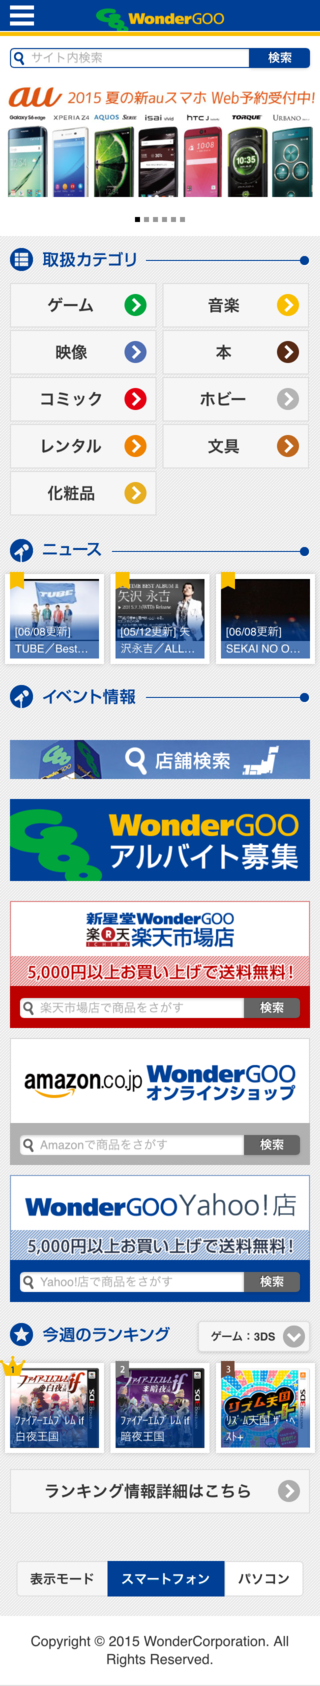 WonderGOOのスマートフォン画面